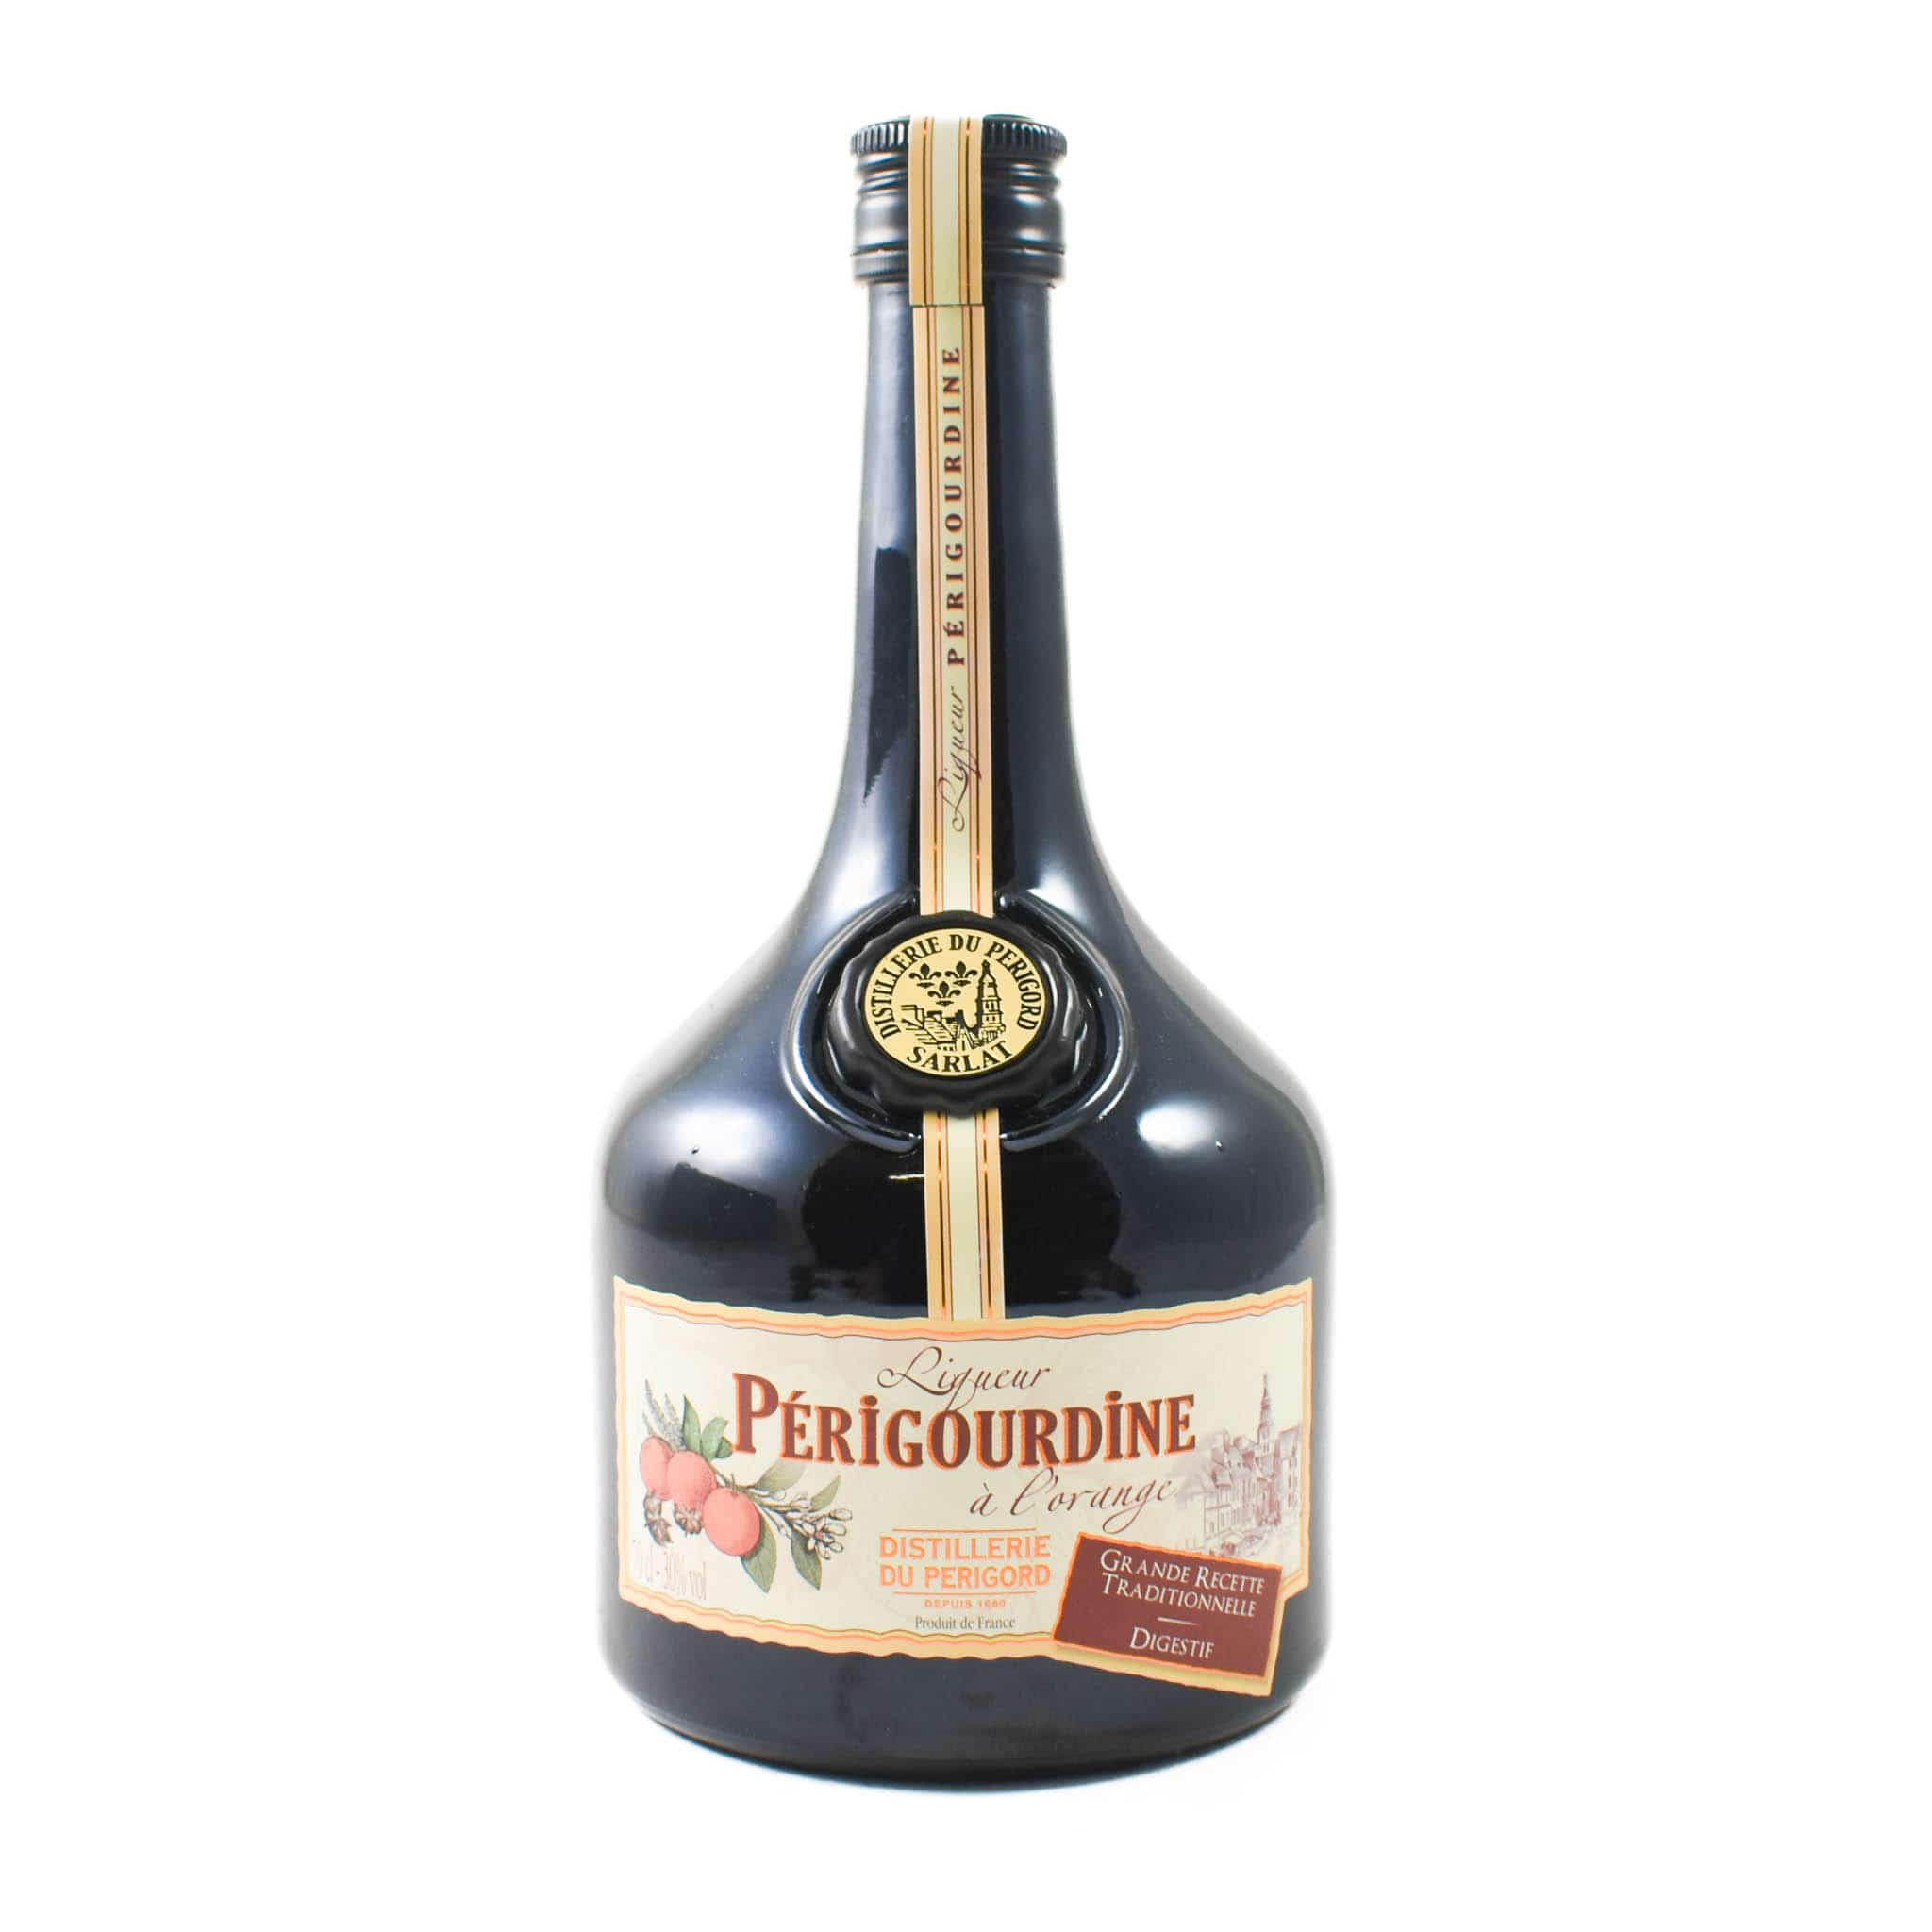 Cherry Rocher Perigourdine Cognac & Orange Liqueur, 700ml